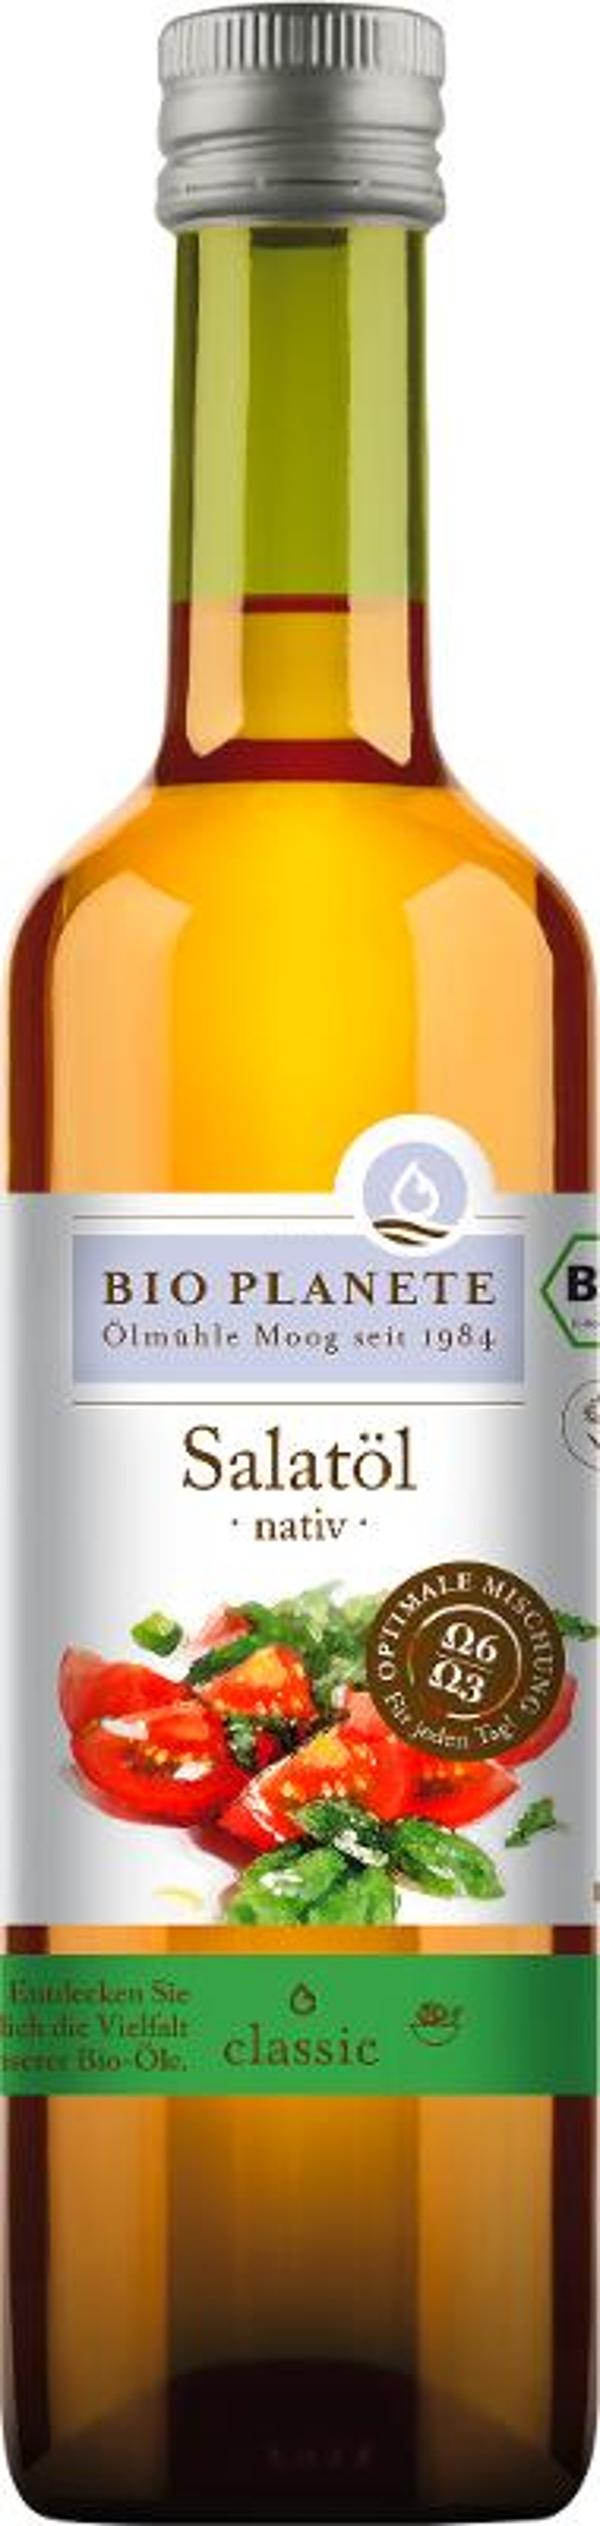 Produktfoto zu Bio Planete Salatöl nativ - 0,5l